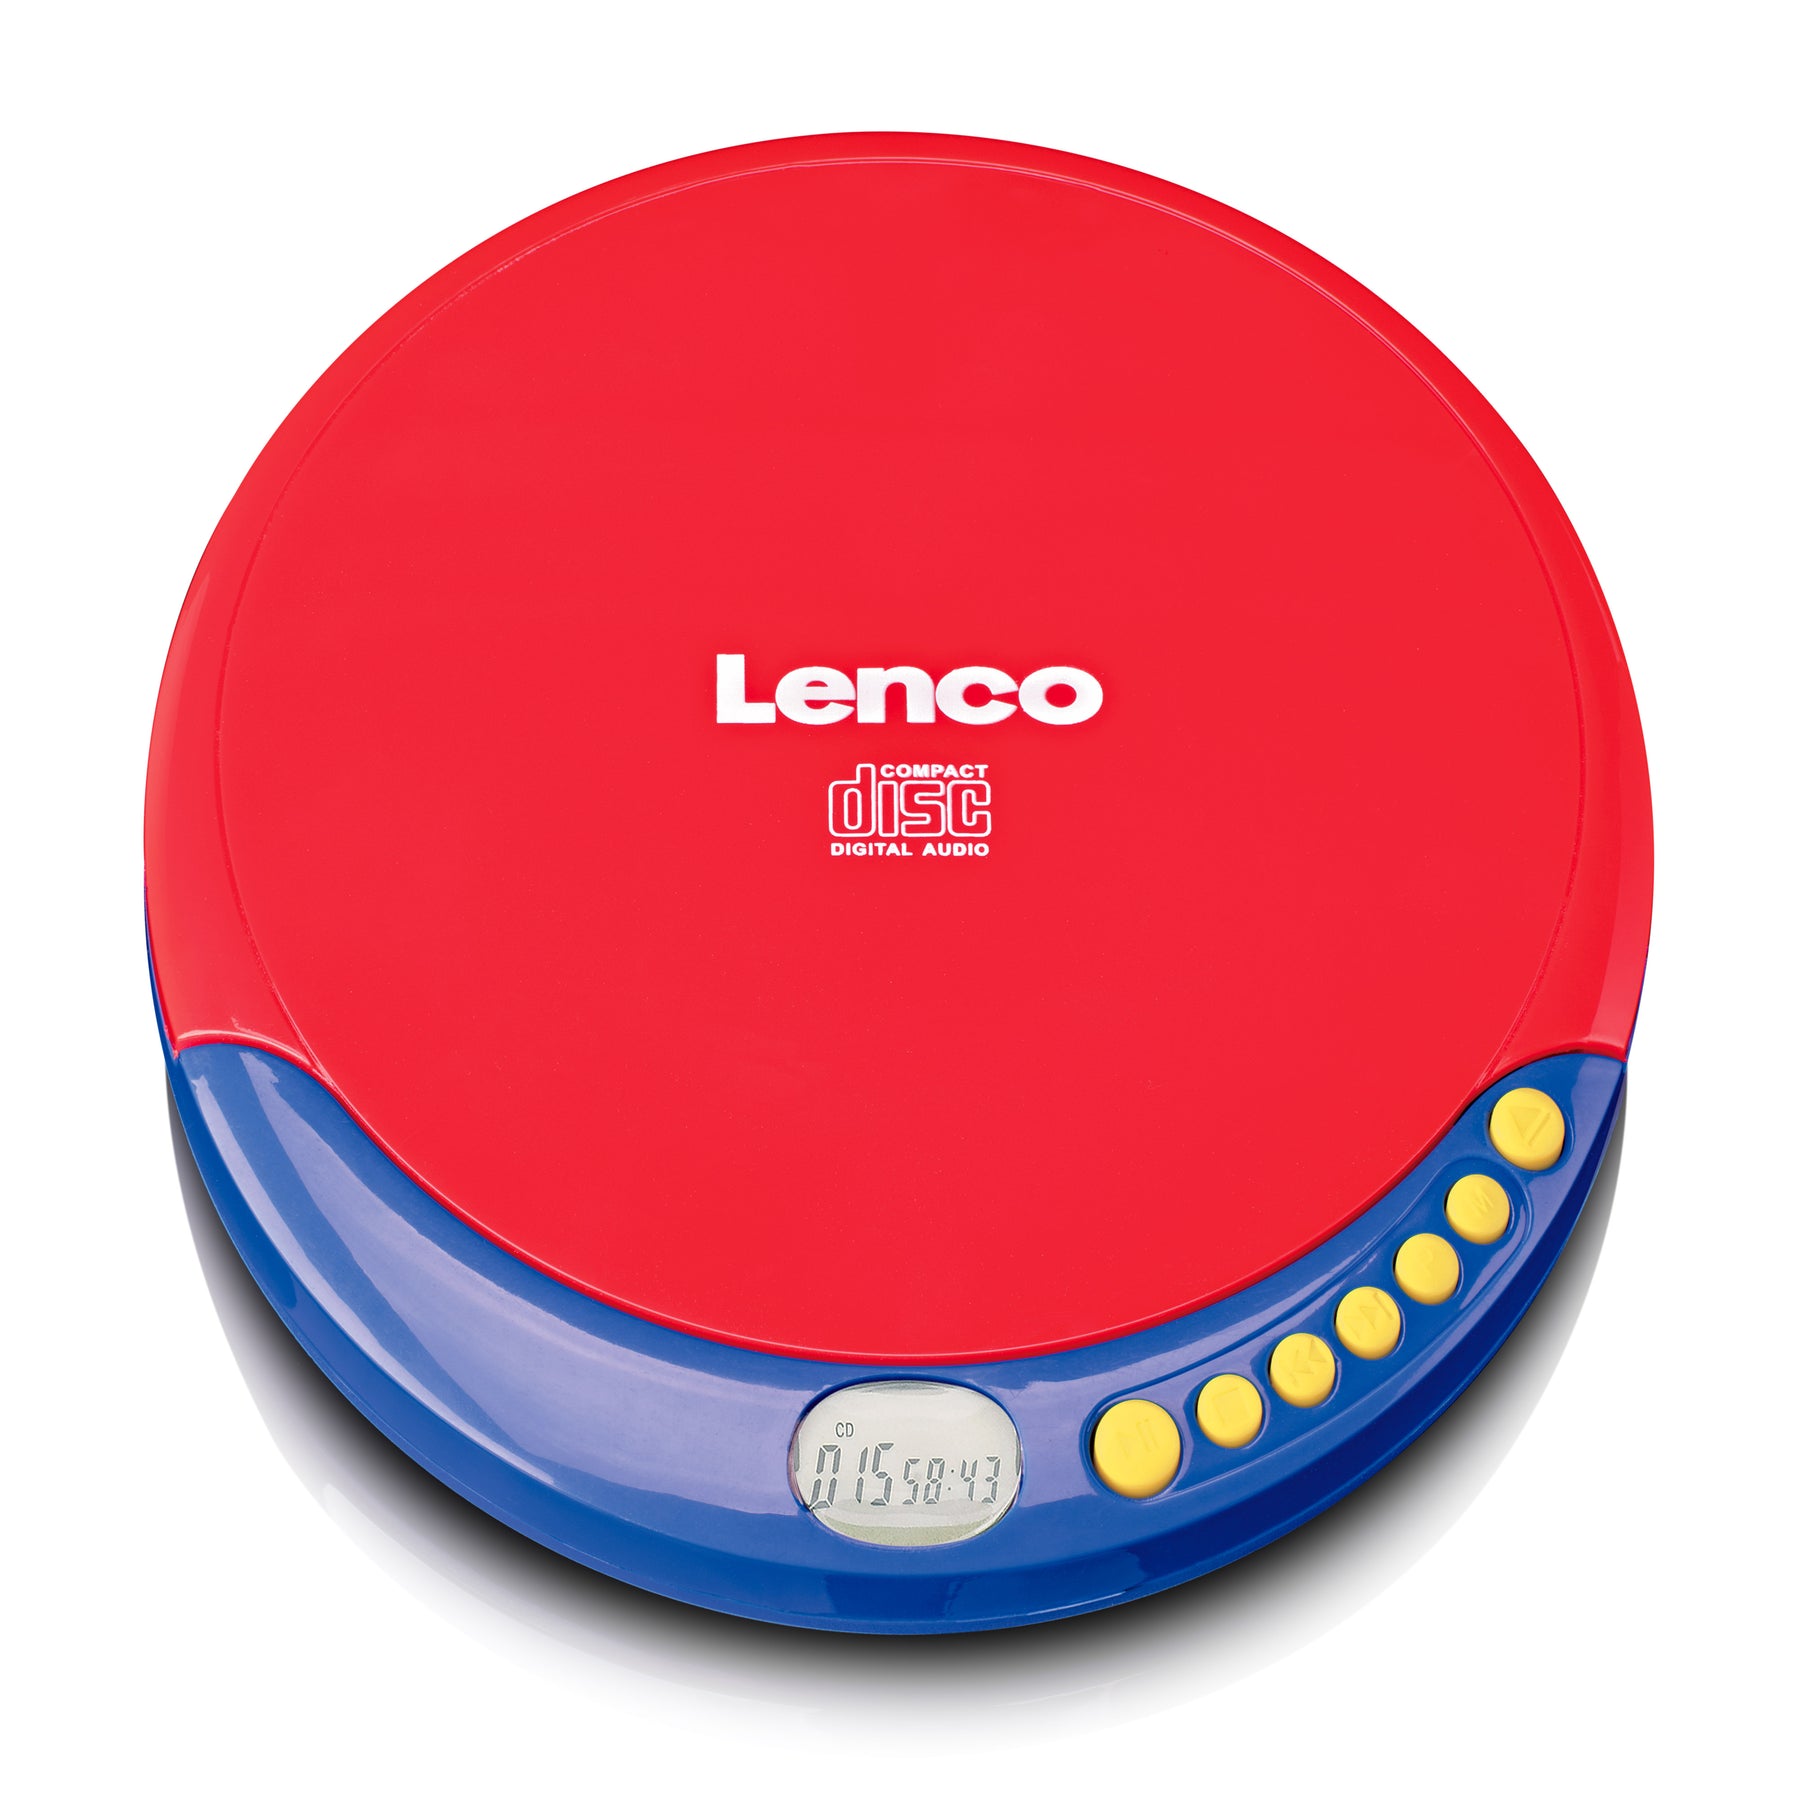 Jetzt Lenco Lenco - Offizieller – CD-021KIDS | Webshop kaufen? im offiziellen Webshop Lenco.de